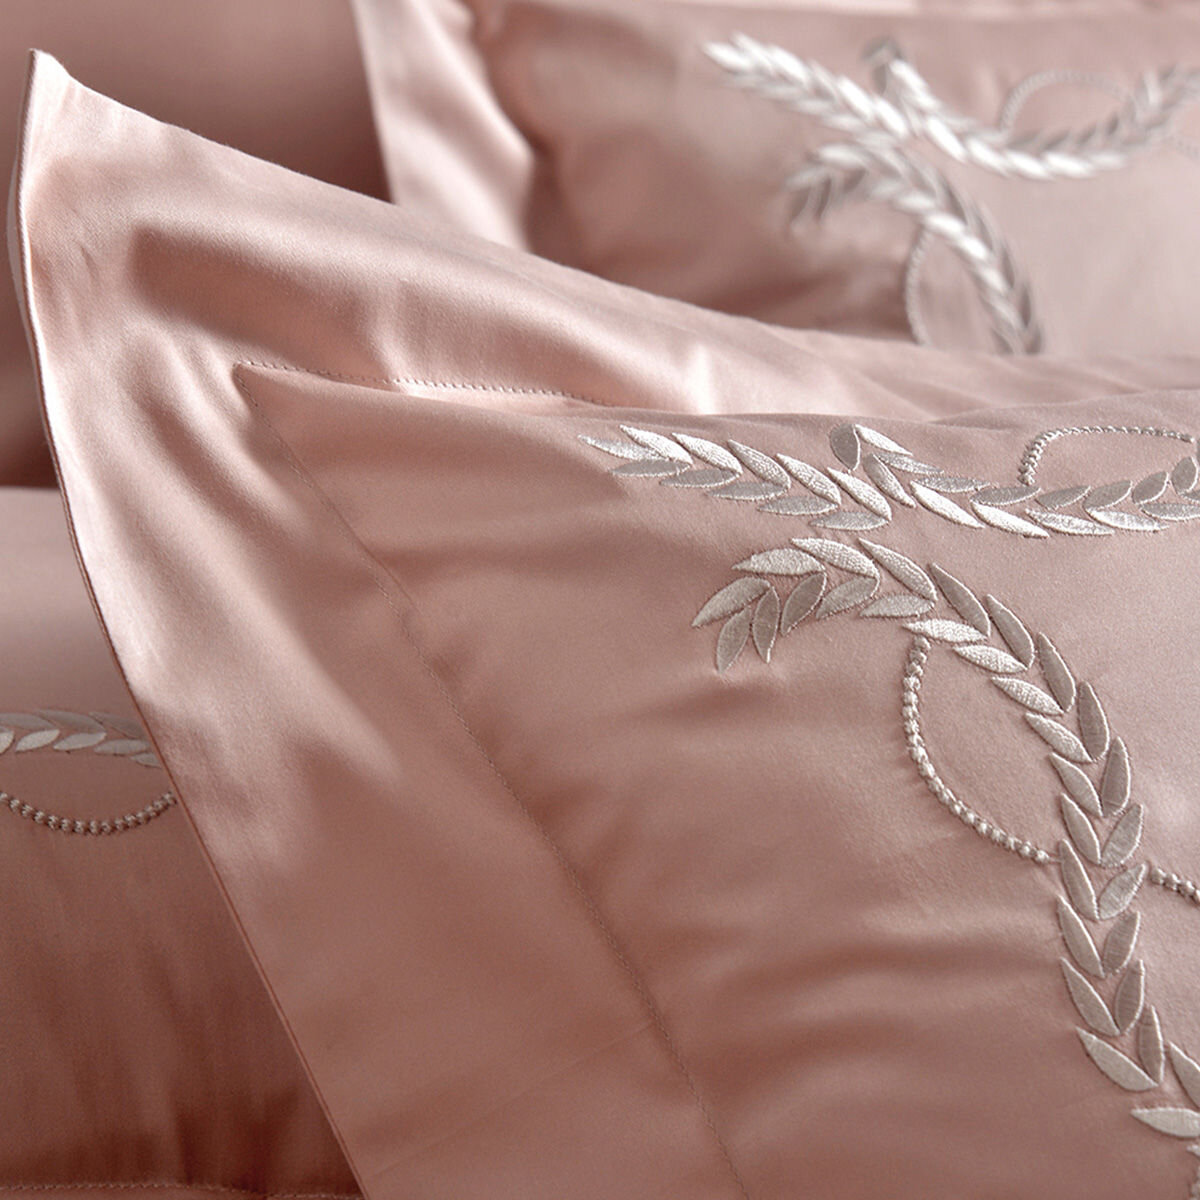 La Belle 雙人300織純棉刺繡被套床包4件組 150公分 X 186公分 藤蔓款 蘿莉粉